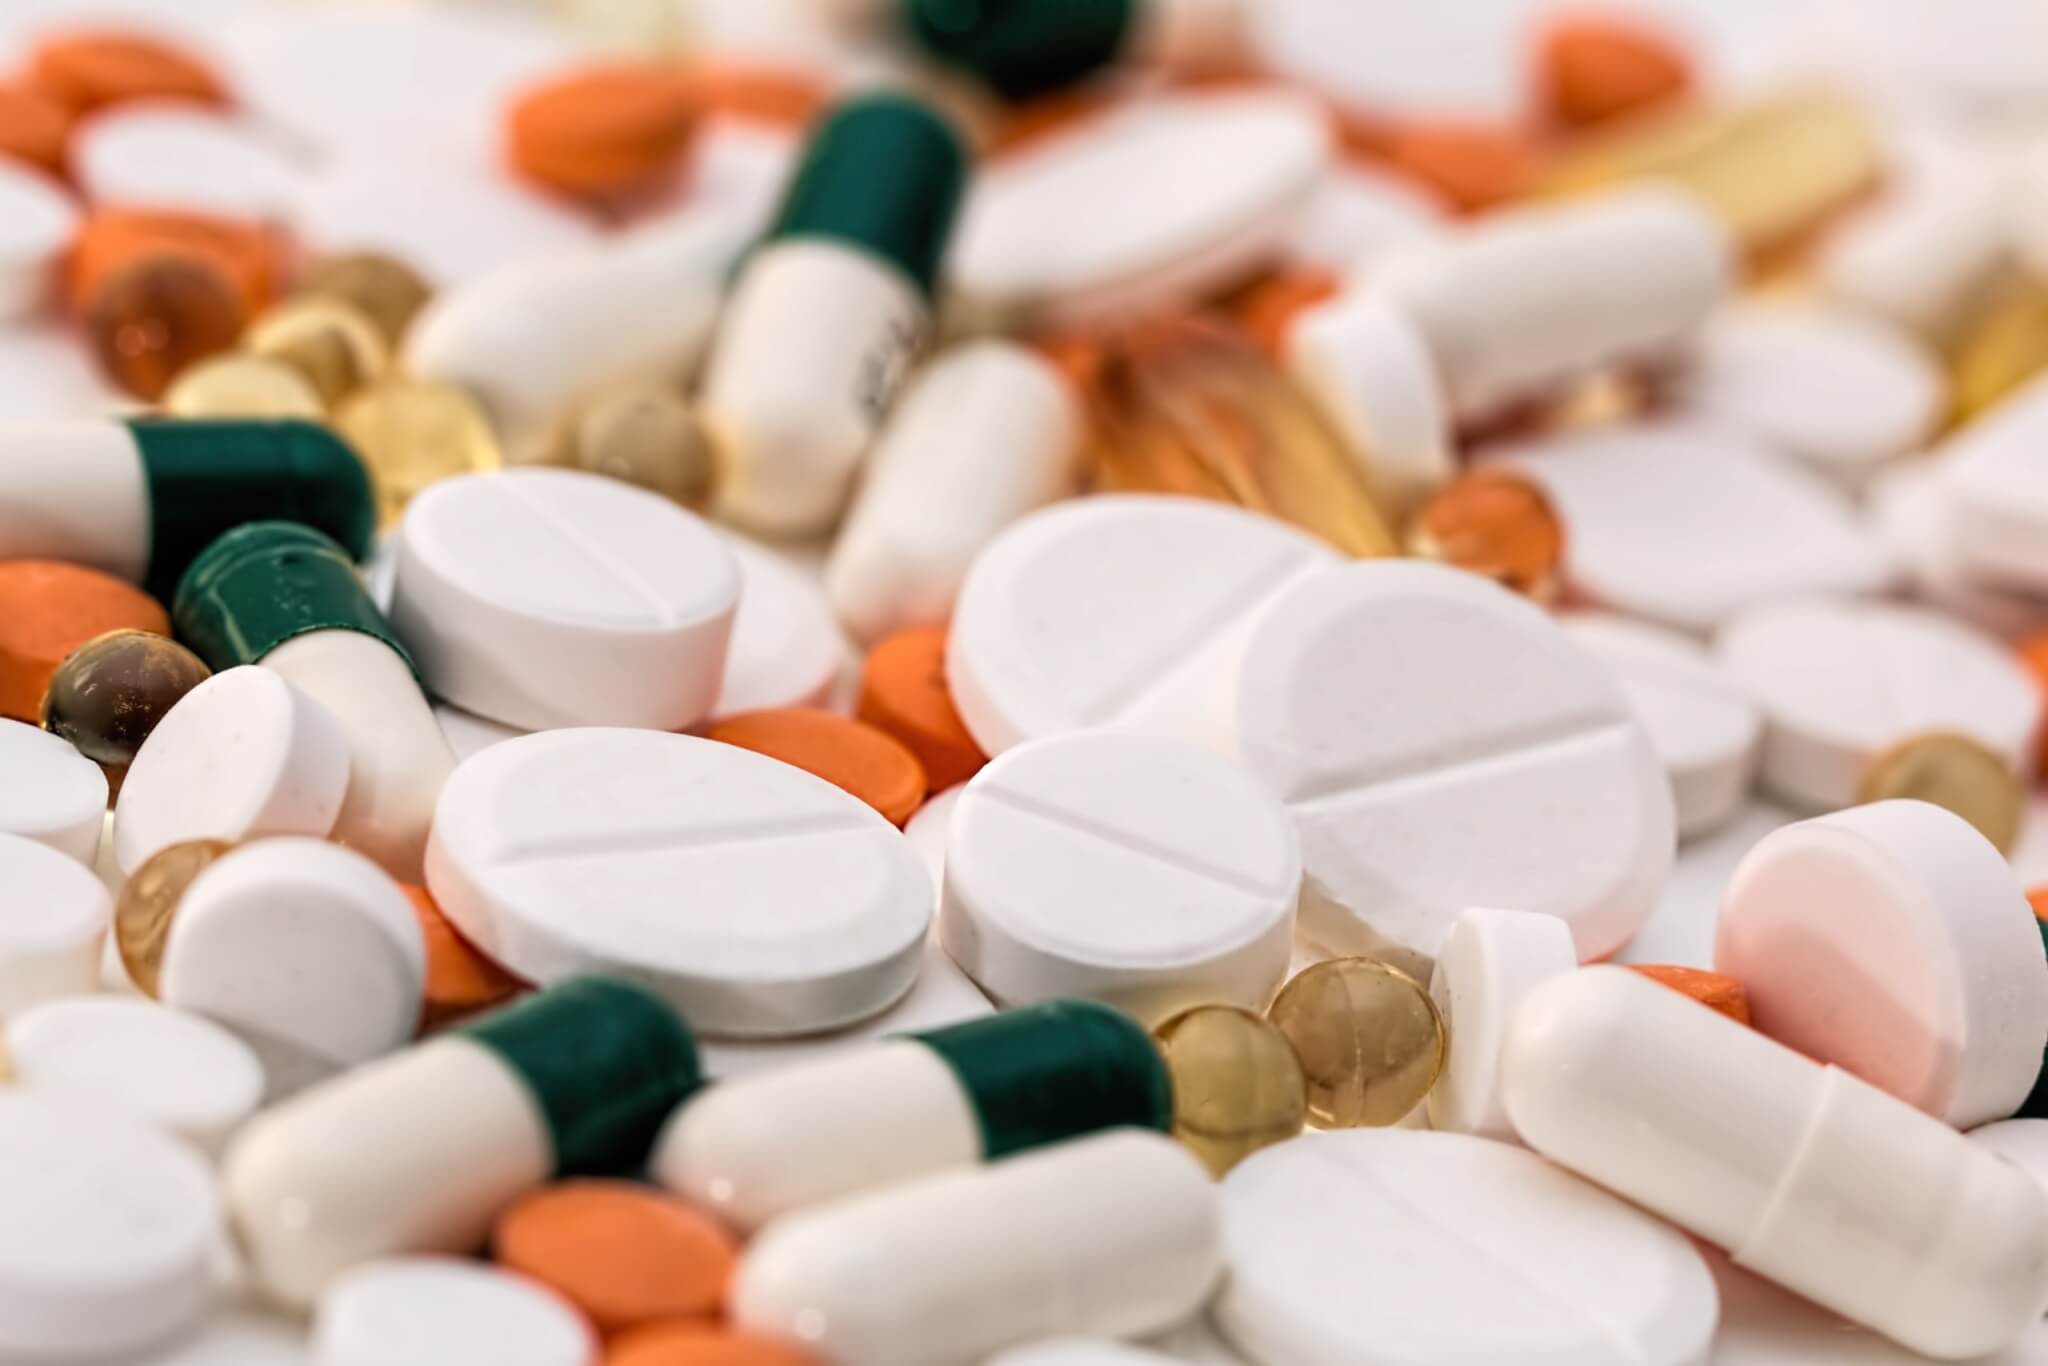 Assortment of pills, medication